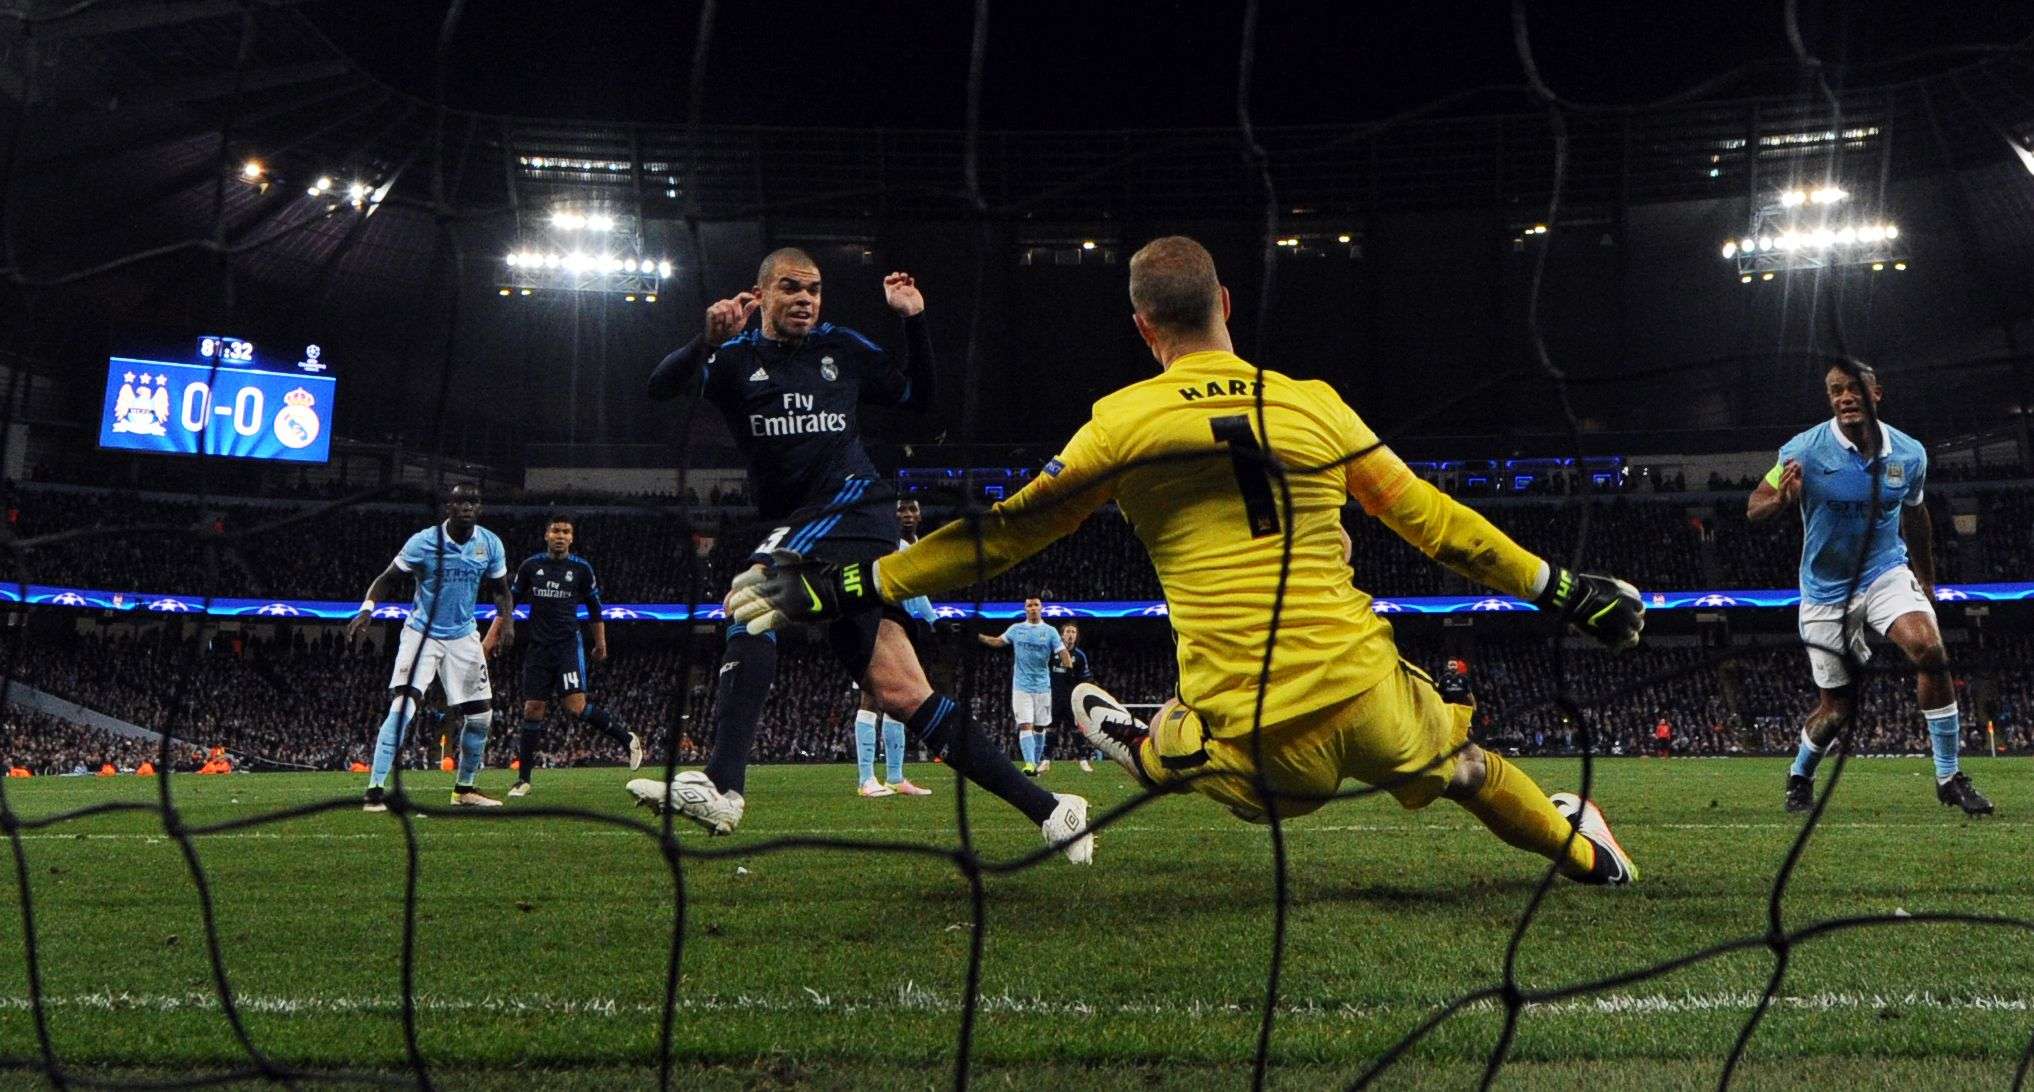 Manchester City goalkeeper Joe Hart saves a close-range shot from Real Madrid defender Pepe. Photo: AFP